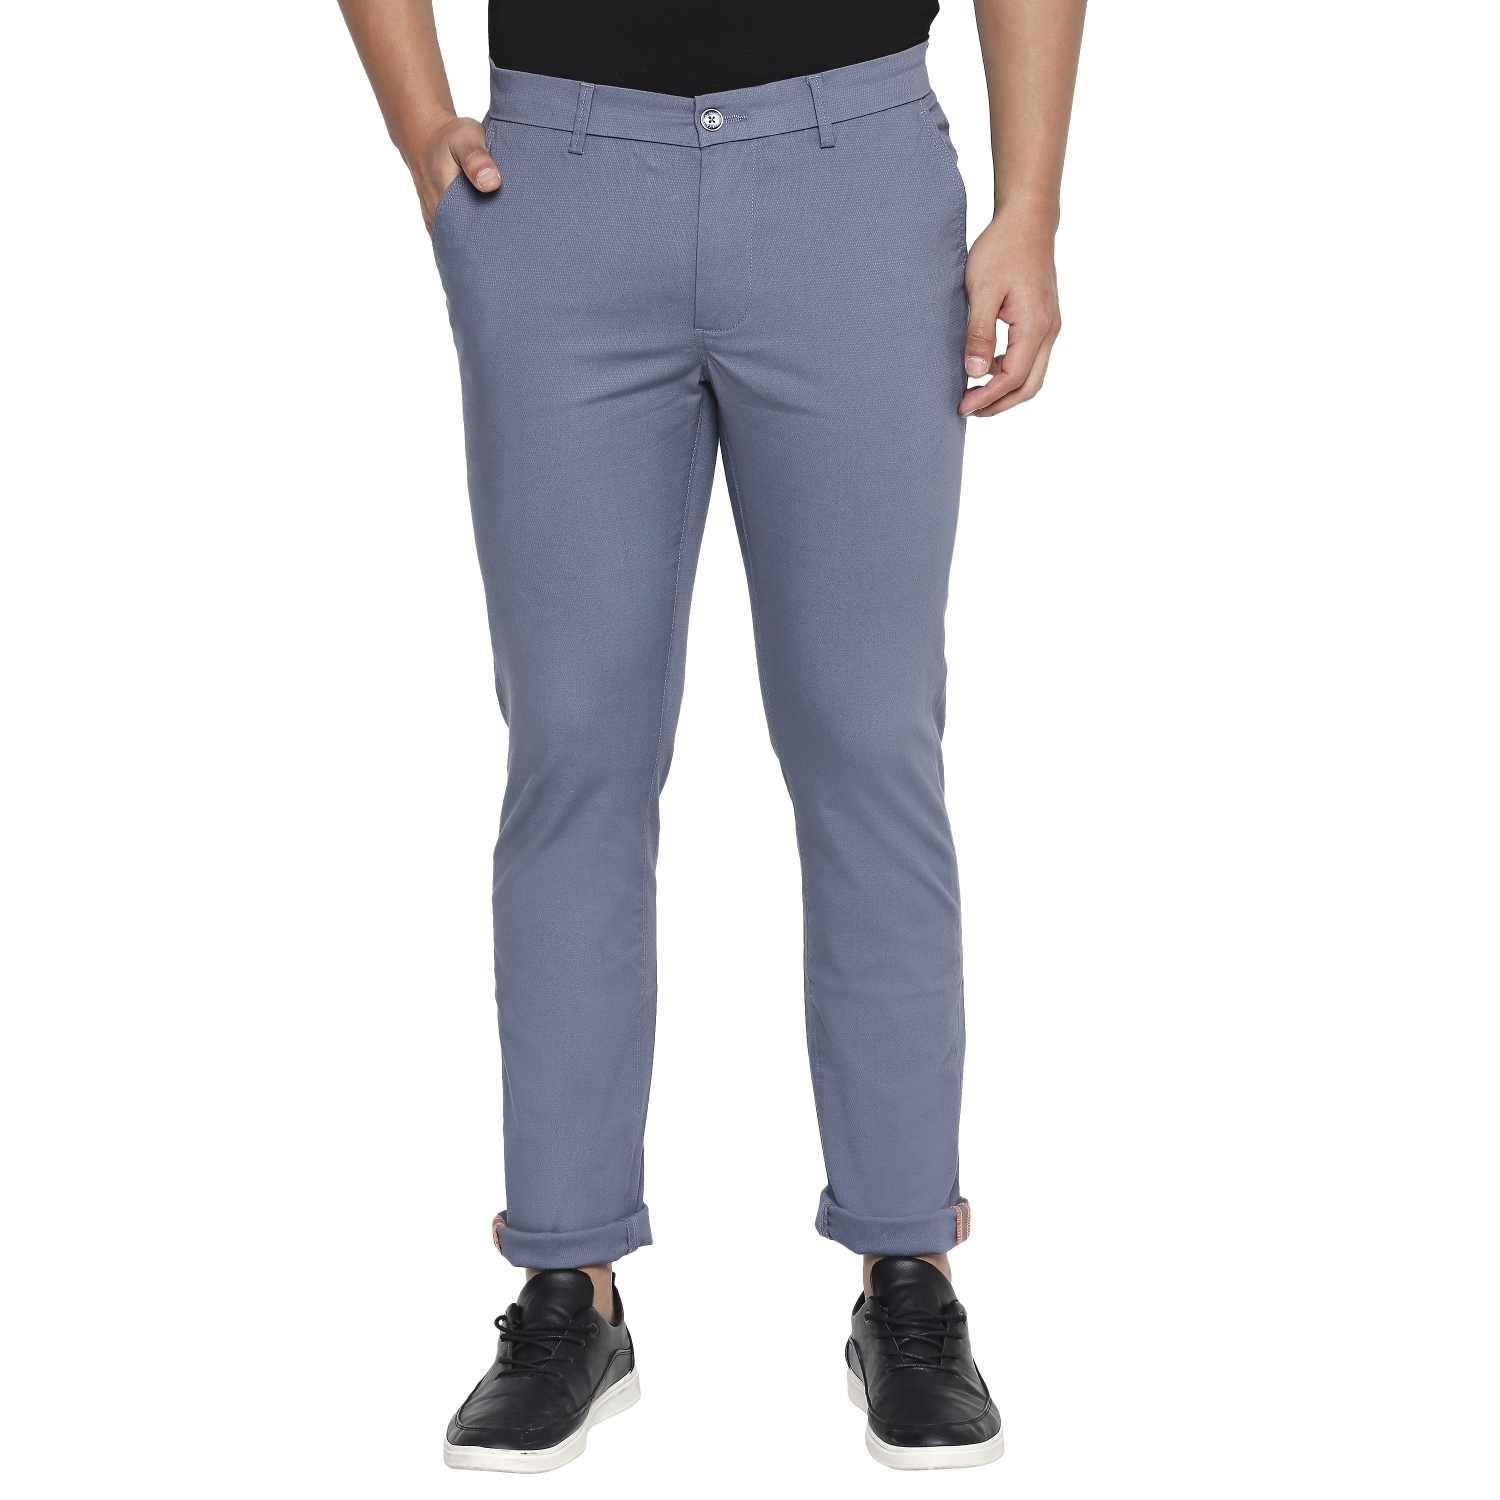 Basics | Basics Tapered Fit Blue Mirage Stretch Trouser